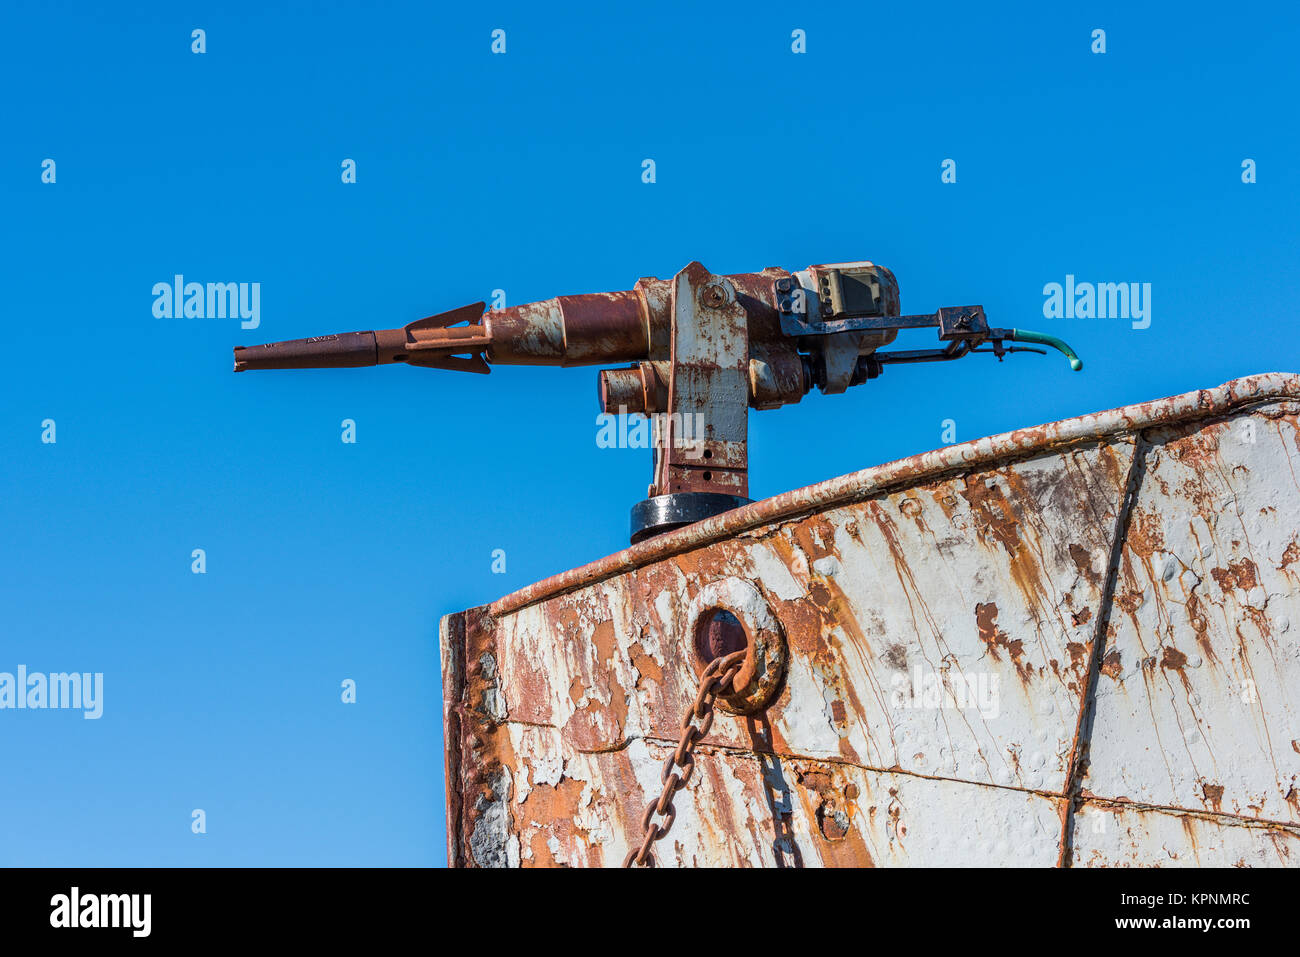 Close-up of rusty harpoon gun in bows Stock Photo